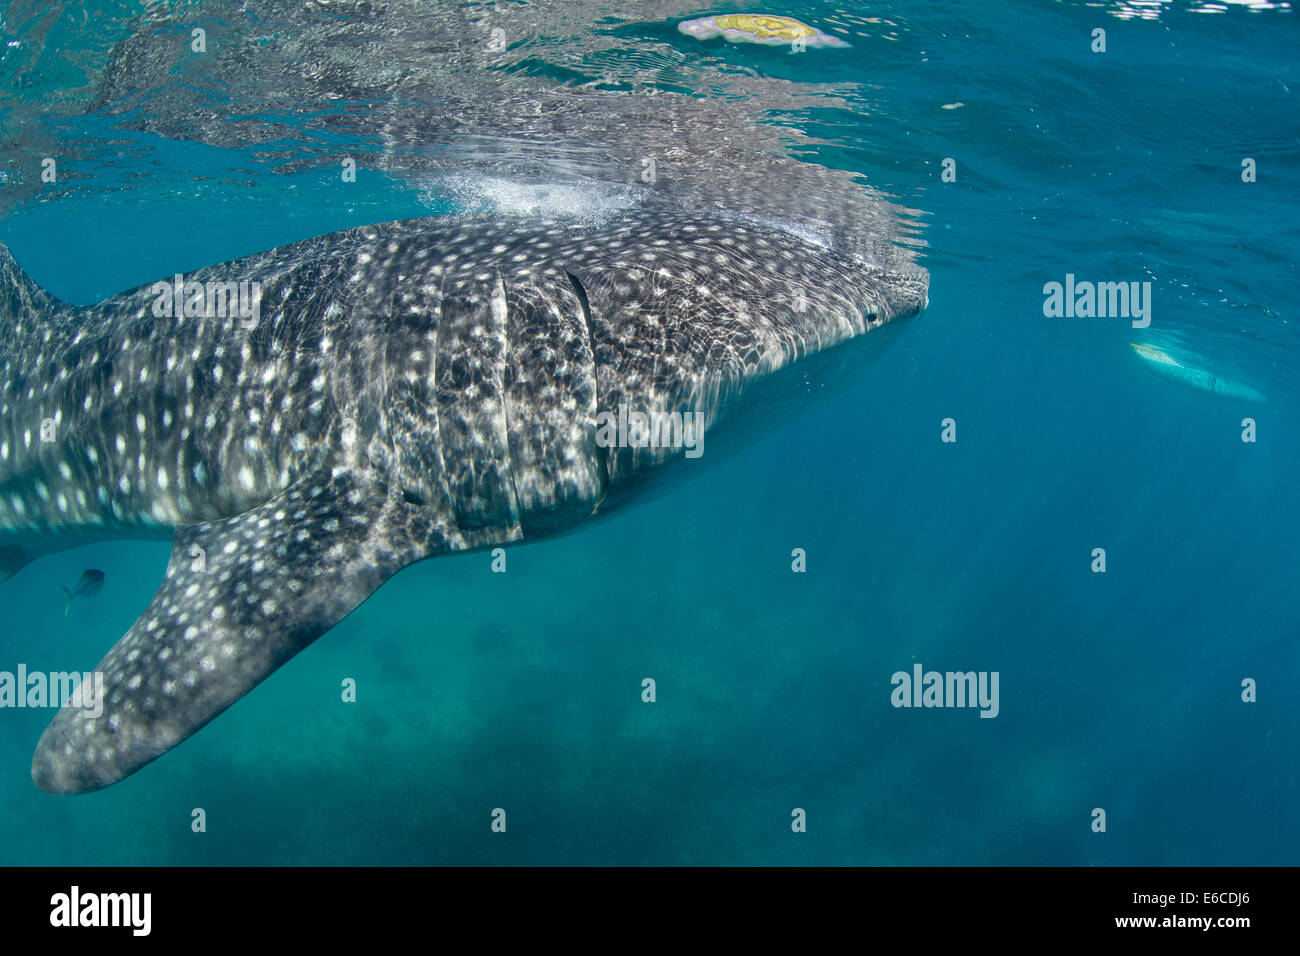 Whale shark snorkel encounter at village of Oslob, on the island of Cebu, Philippines. Stock Photo